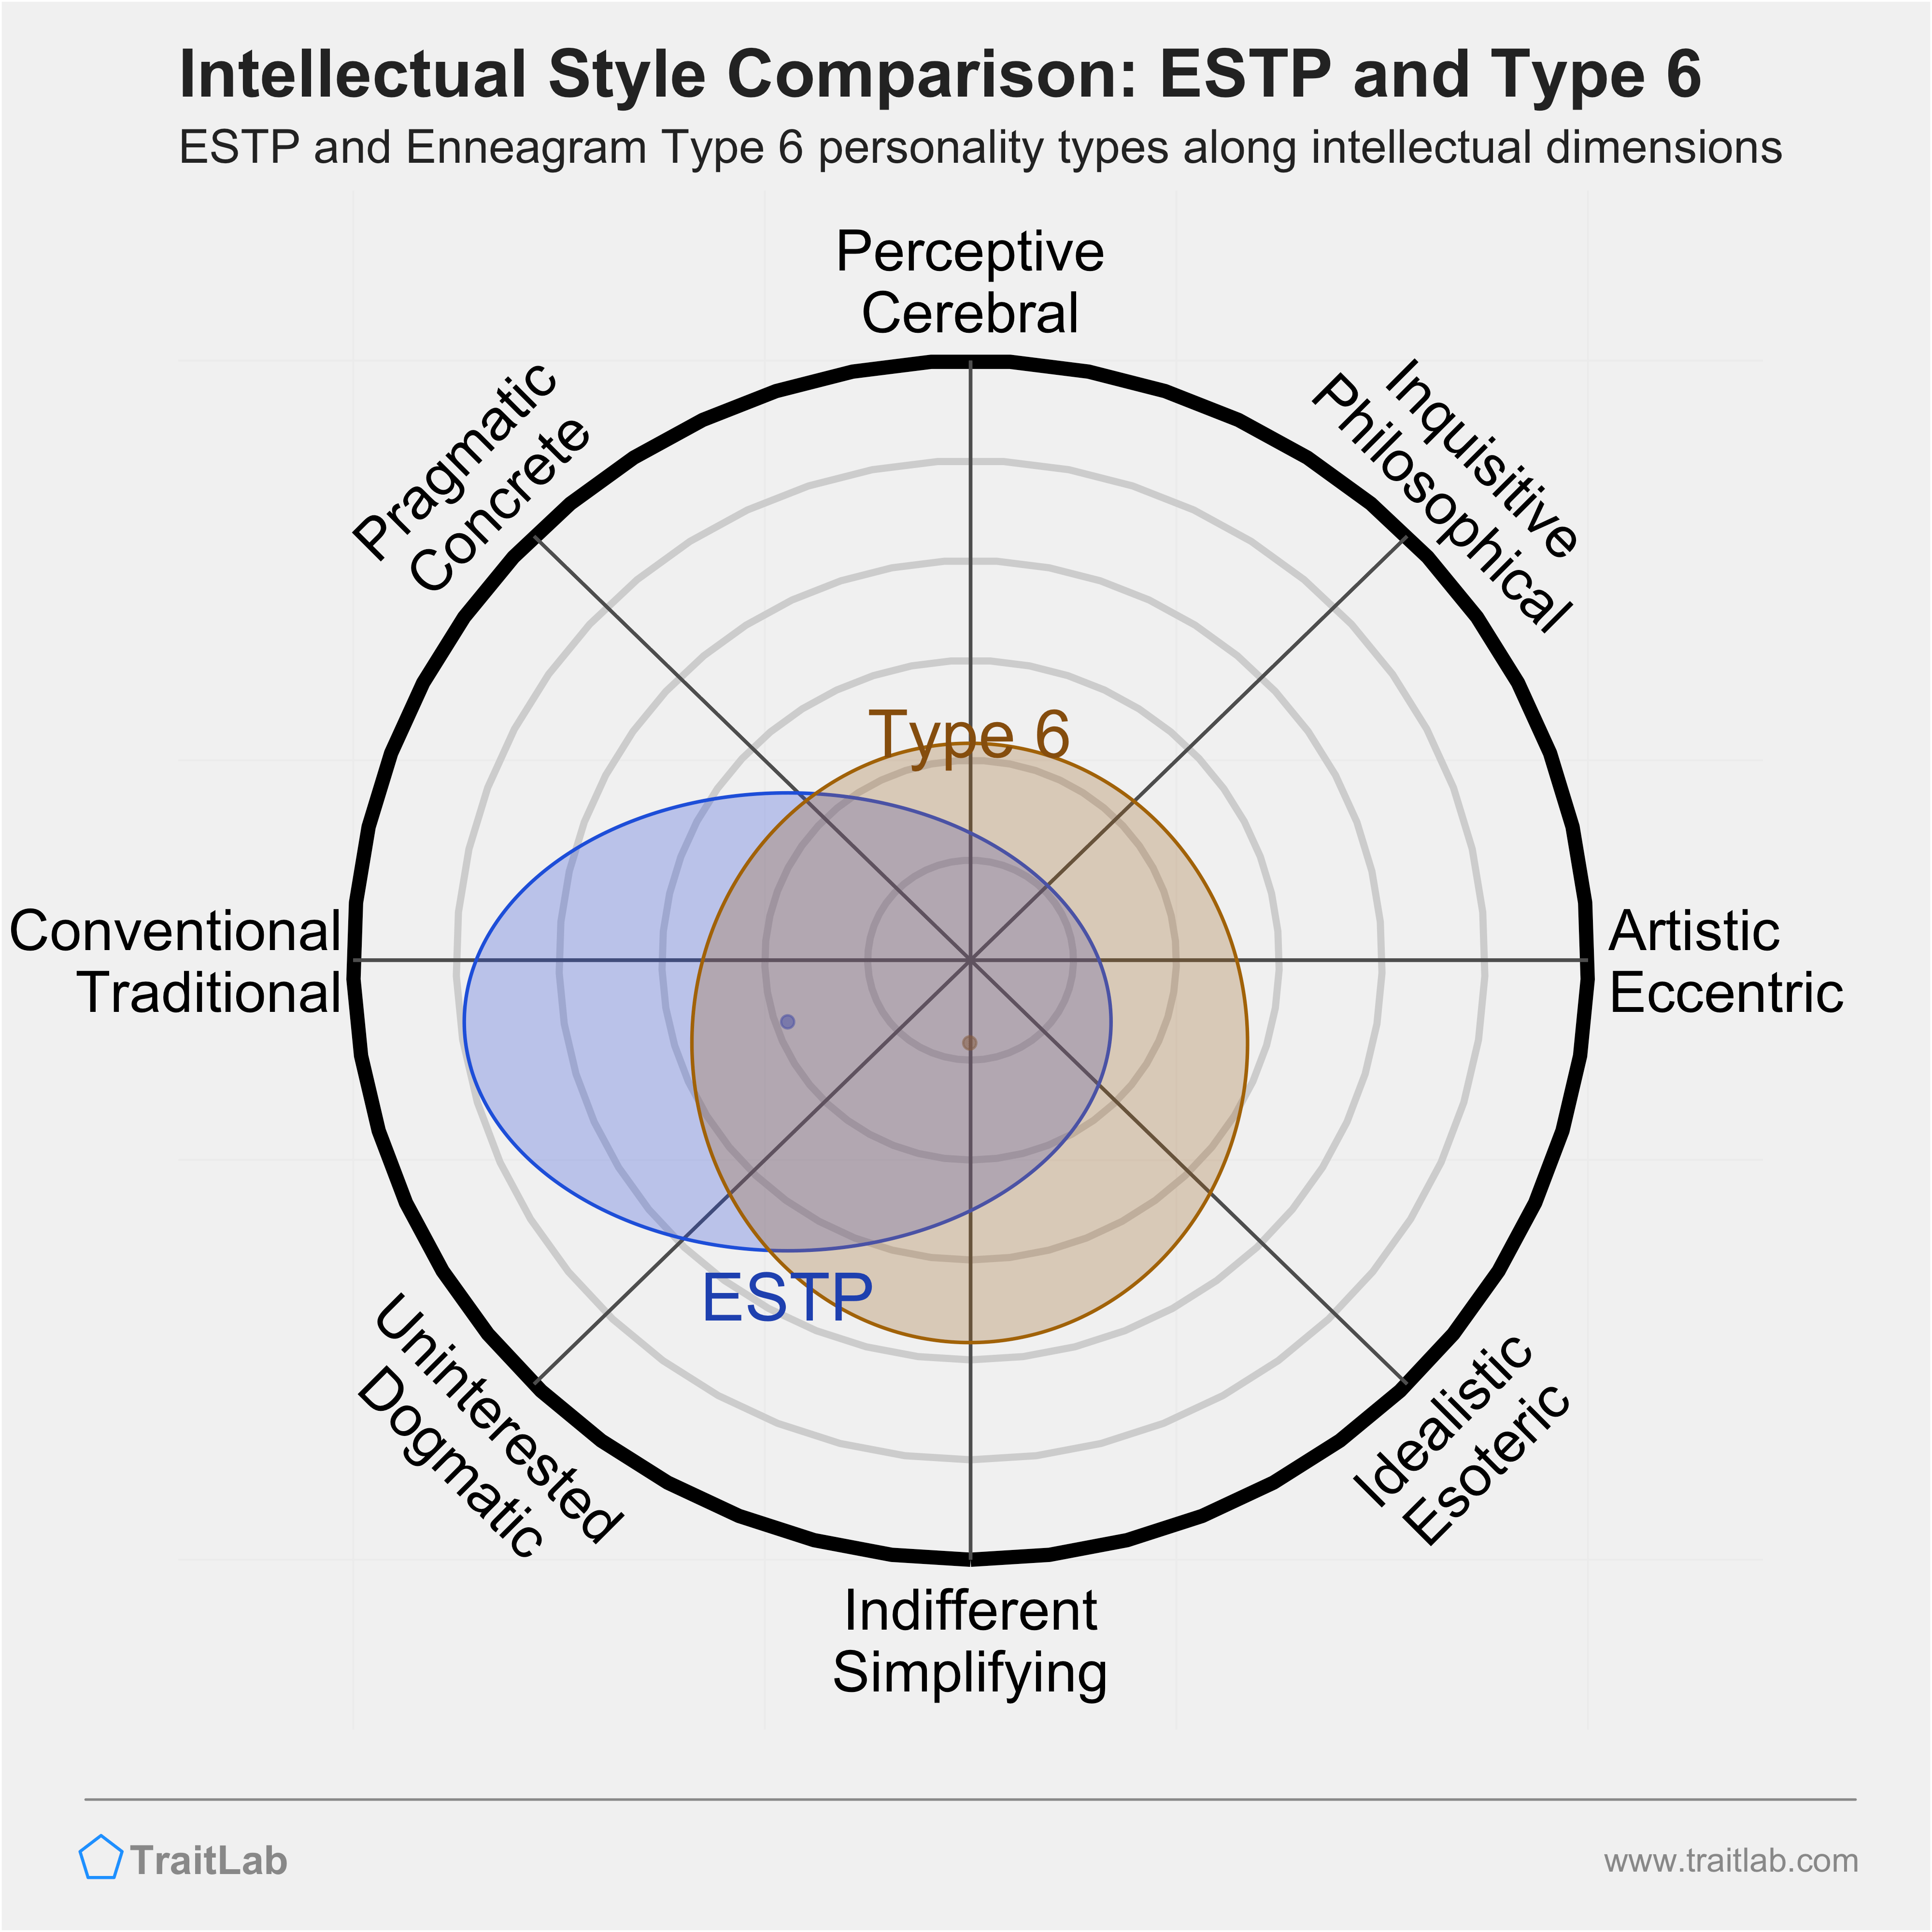 ESTP and Type 6 comparison across intellectual dimensions